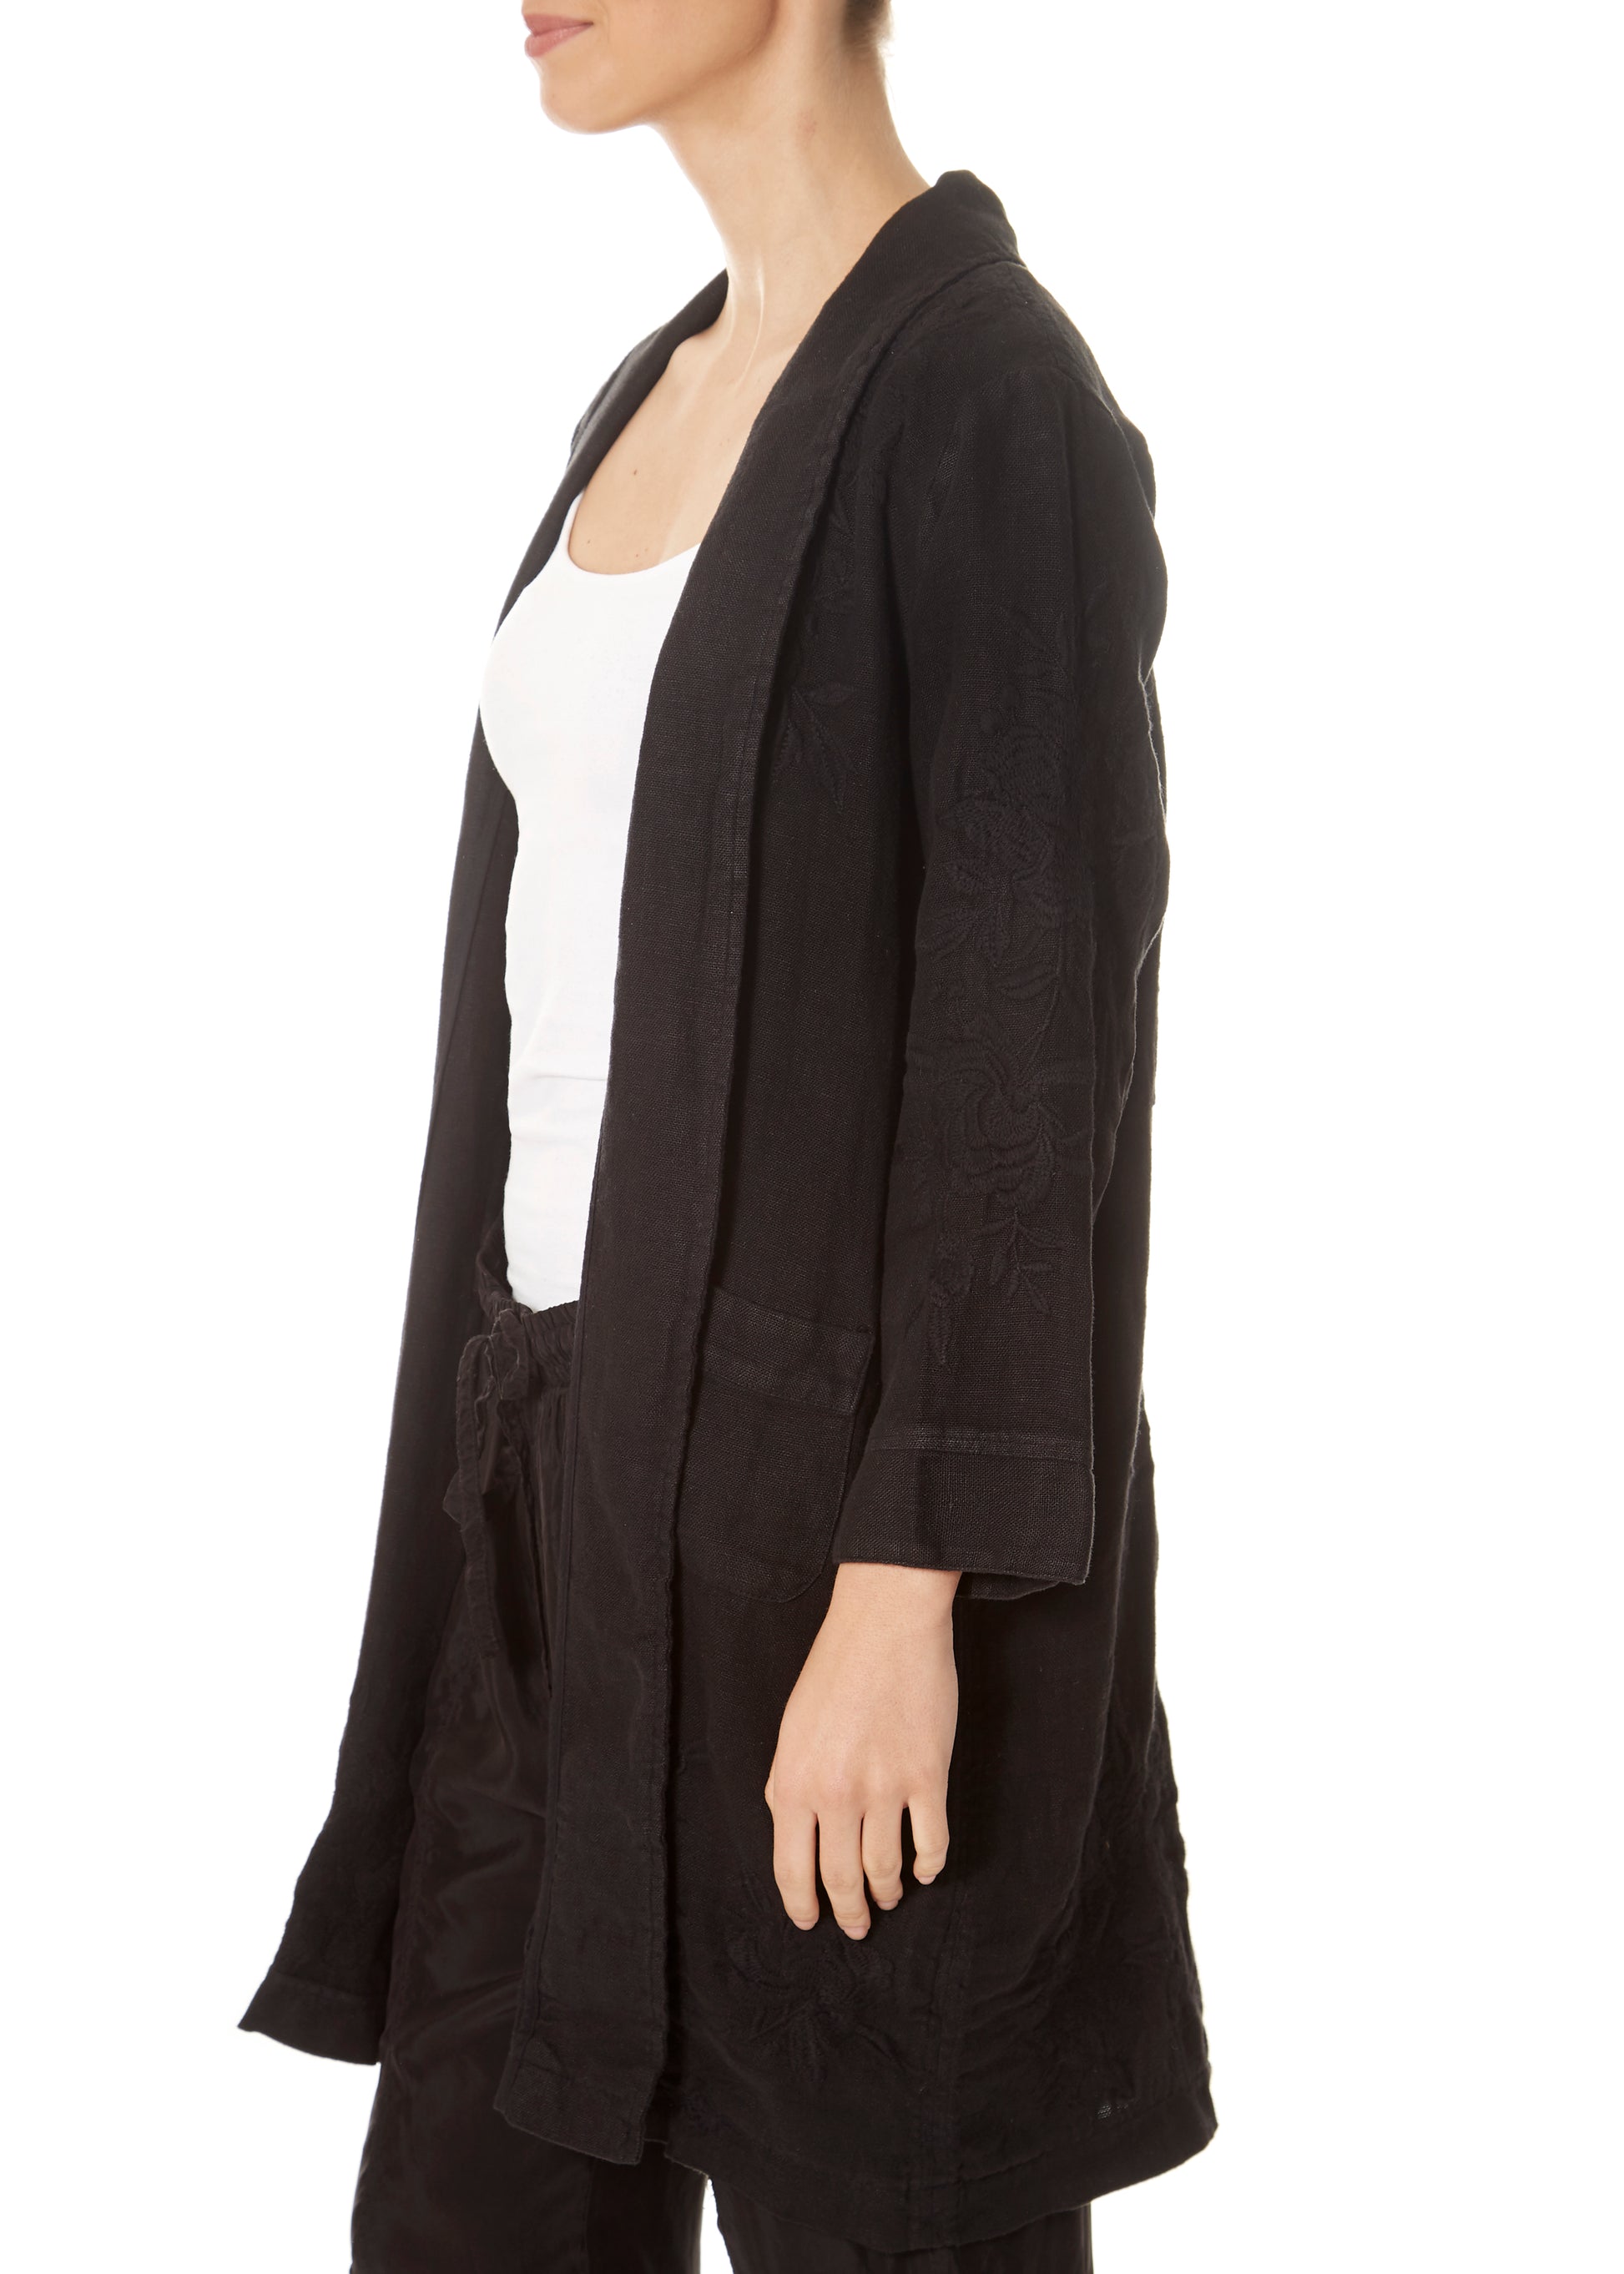 'Sadie' Heavy Black Linen Coat - Jessimara